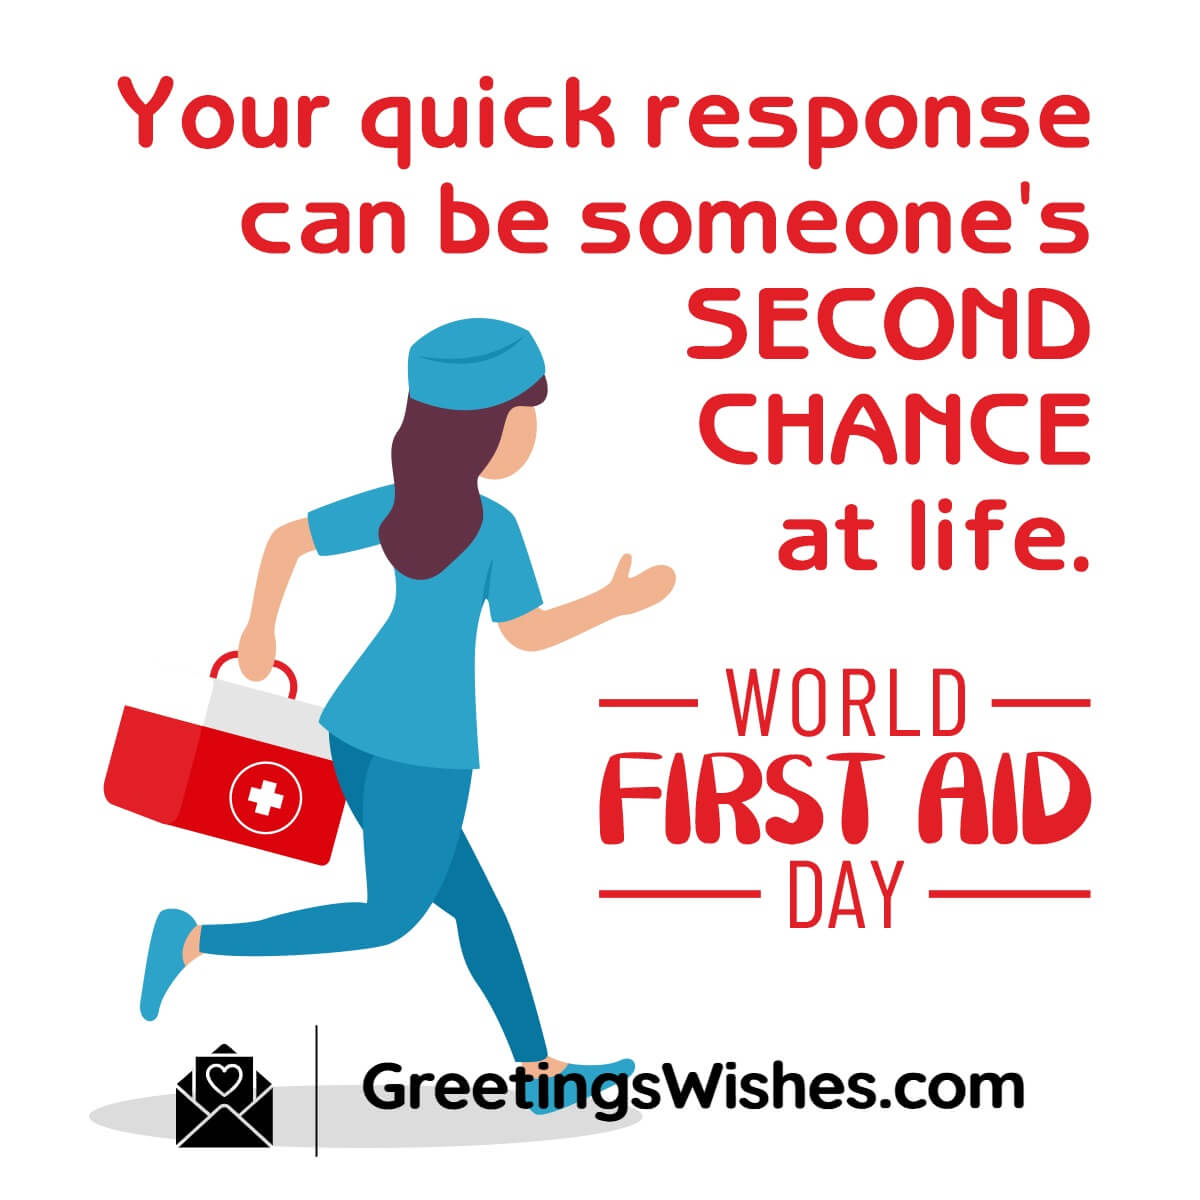 World First Aid Day Whstdspp Status